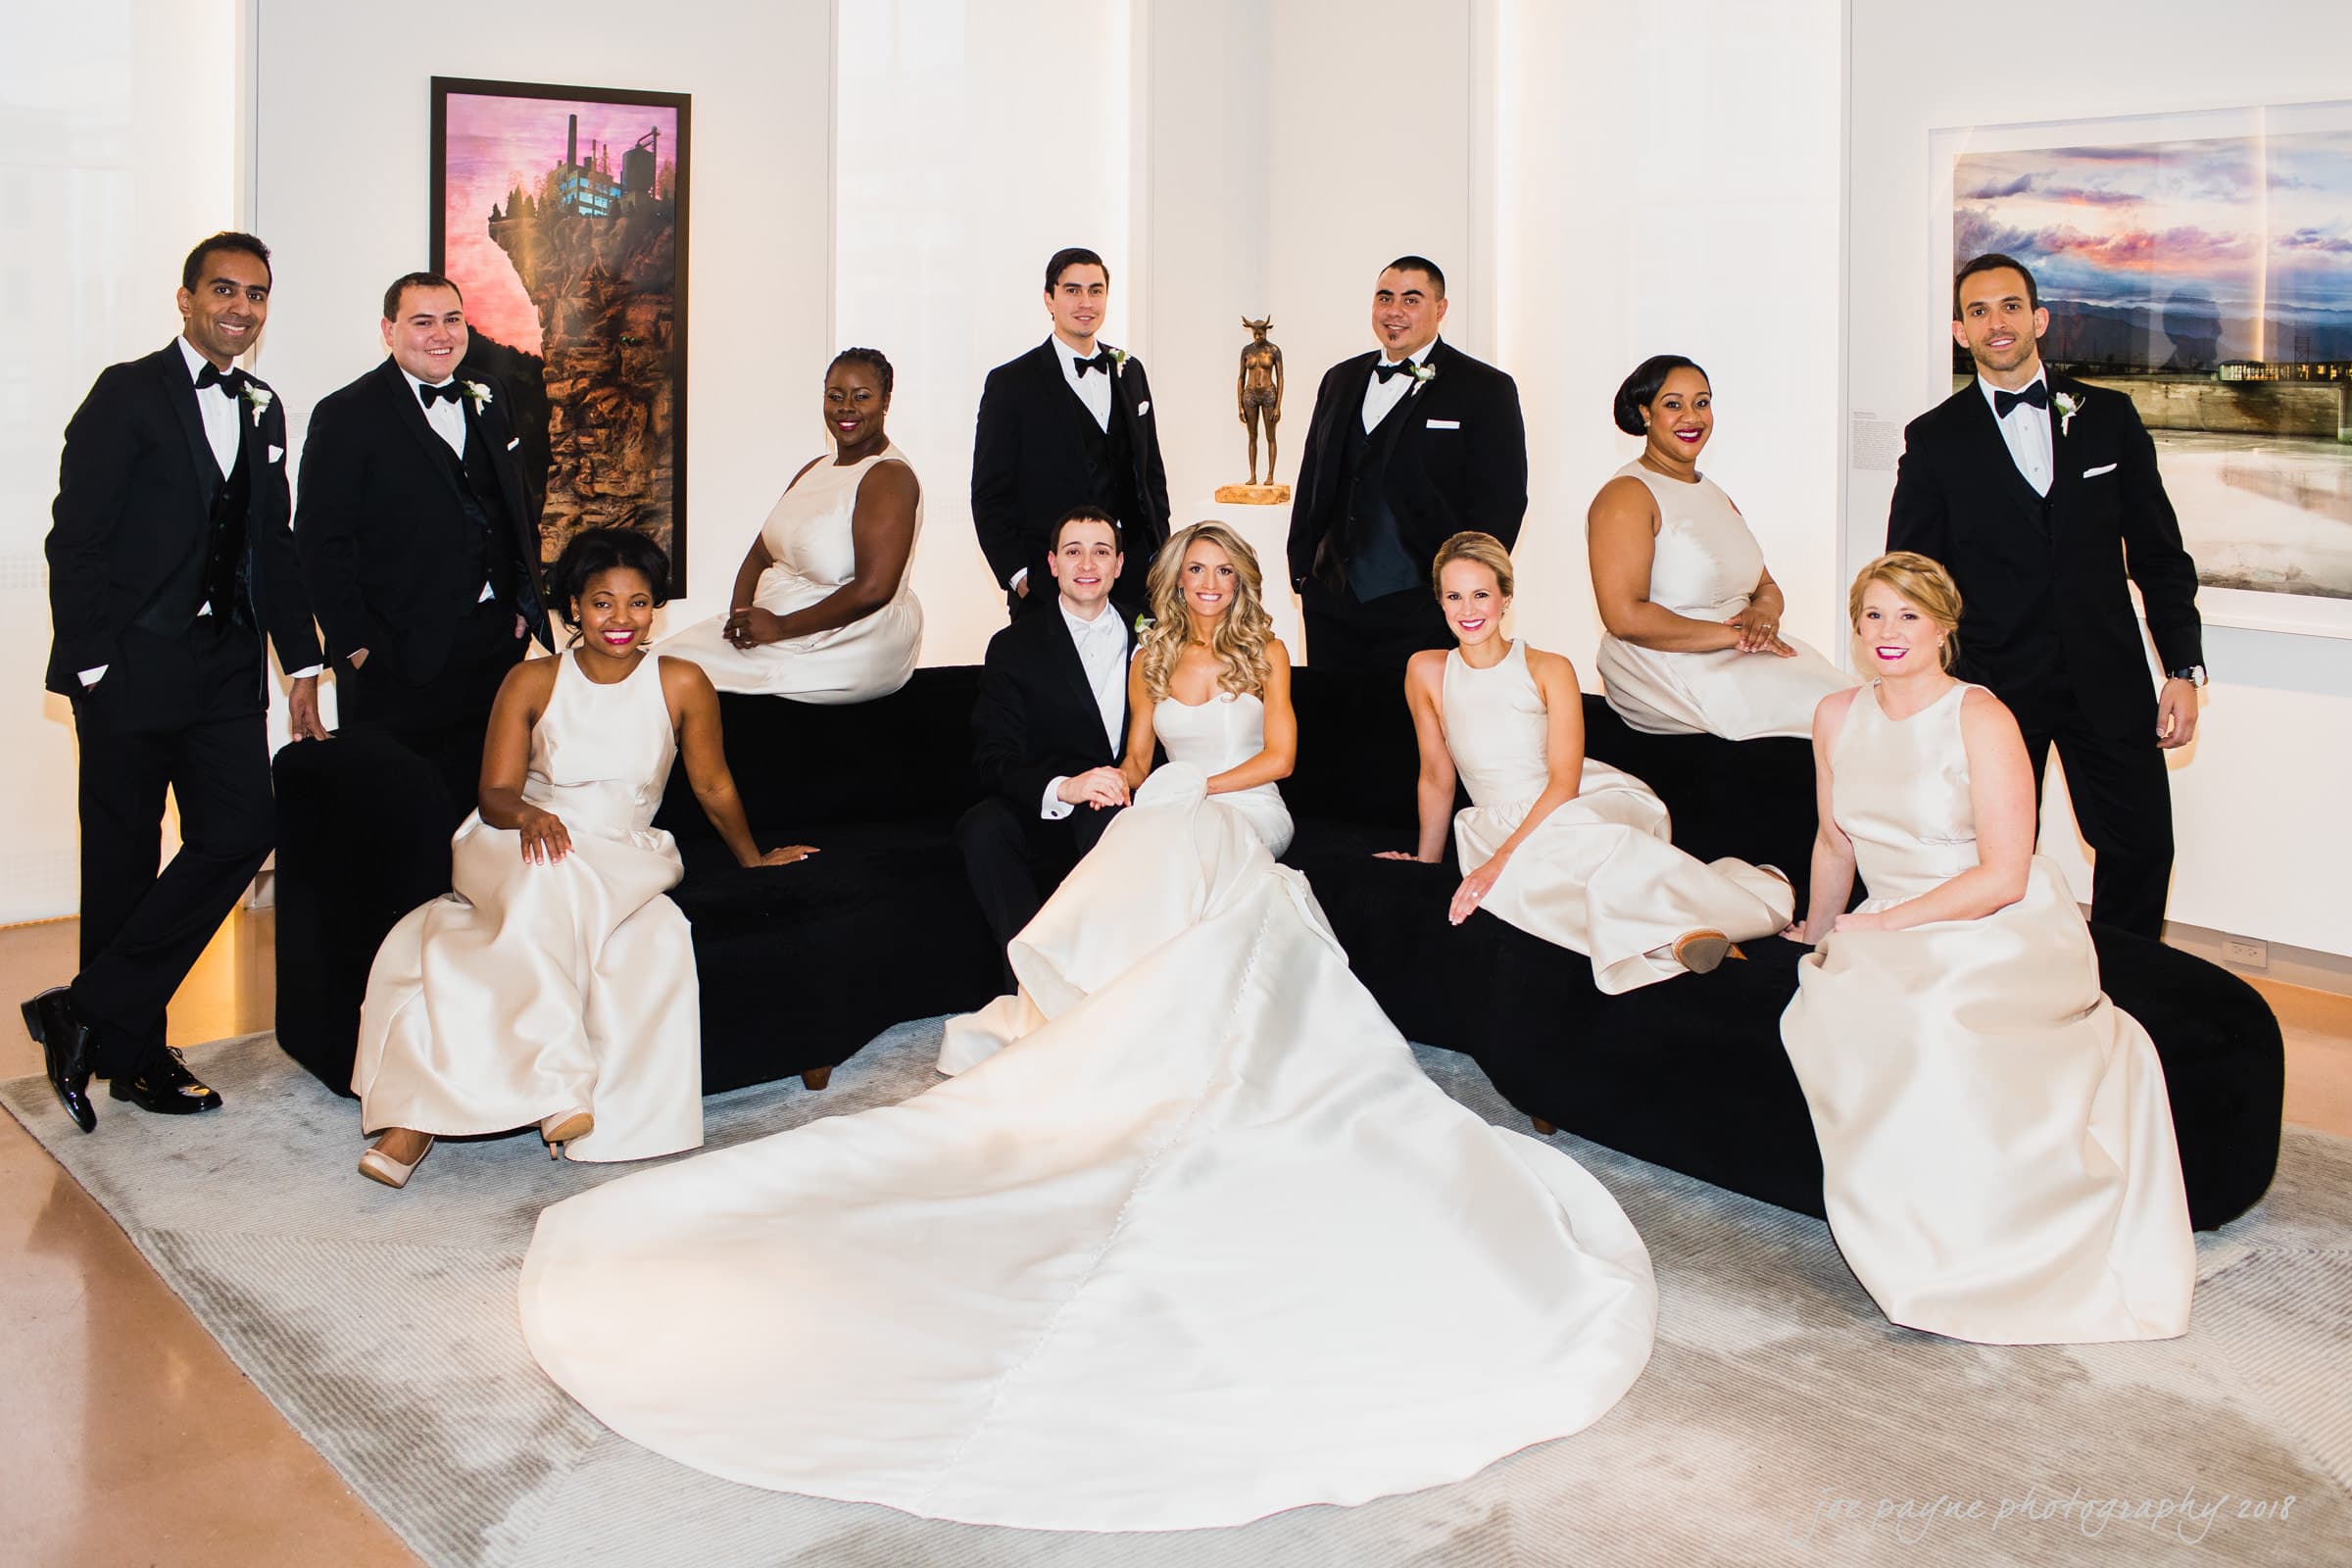 21c, duke chapel & cookery wedding photography – brandy & gabe